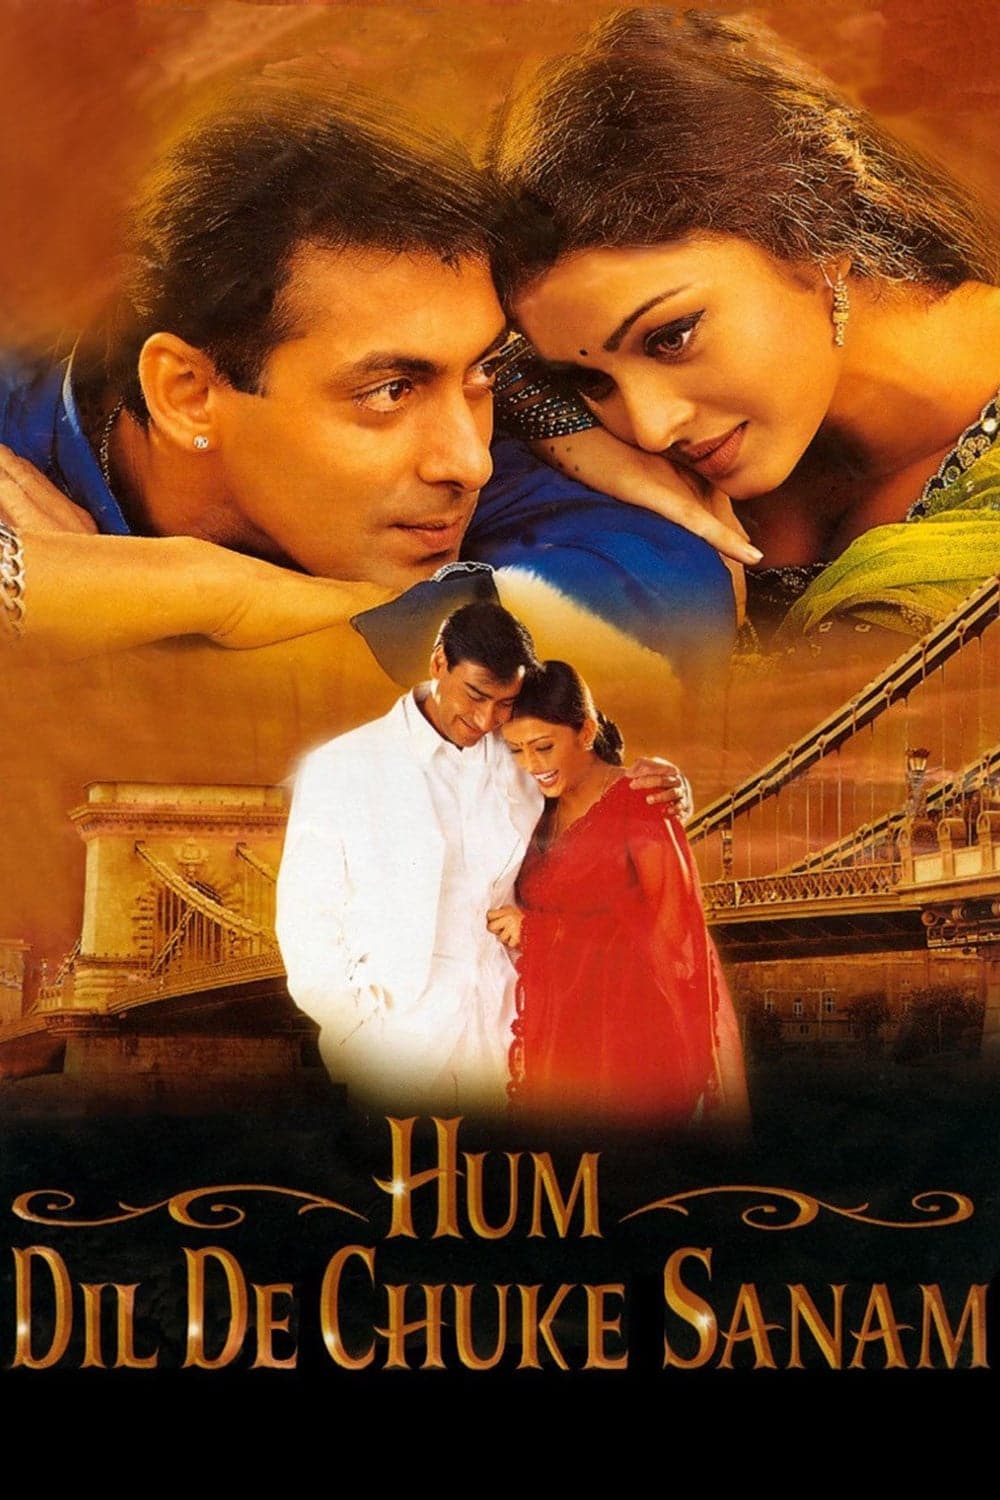 Poster for the movie "Hum Dil De Chuke Sanam"